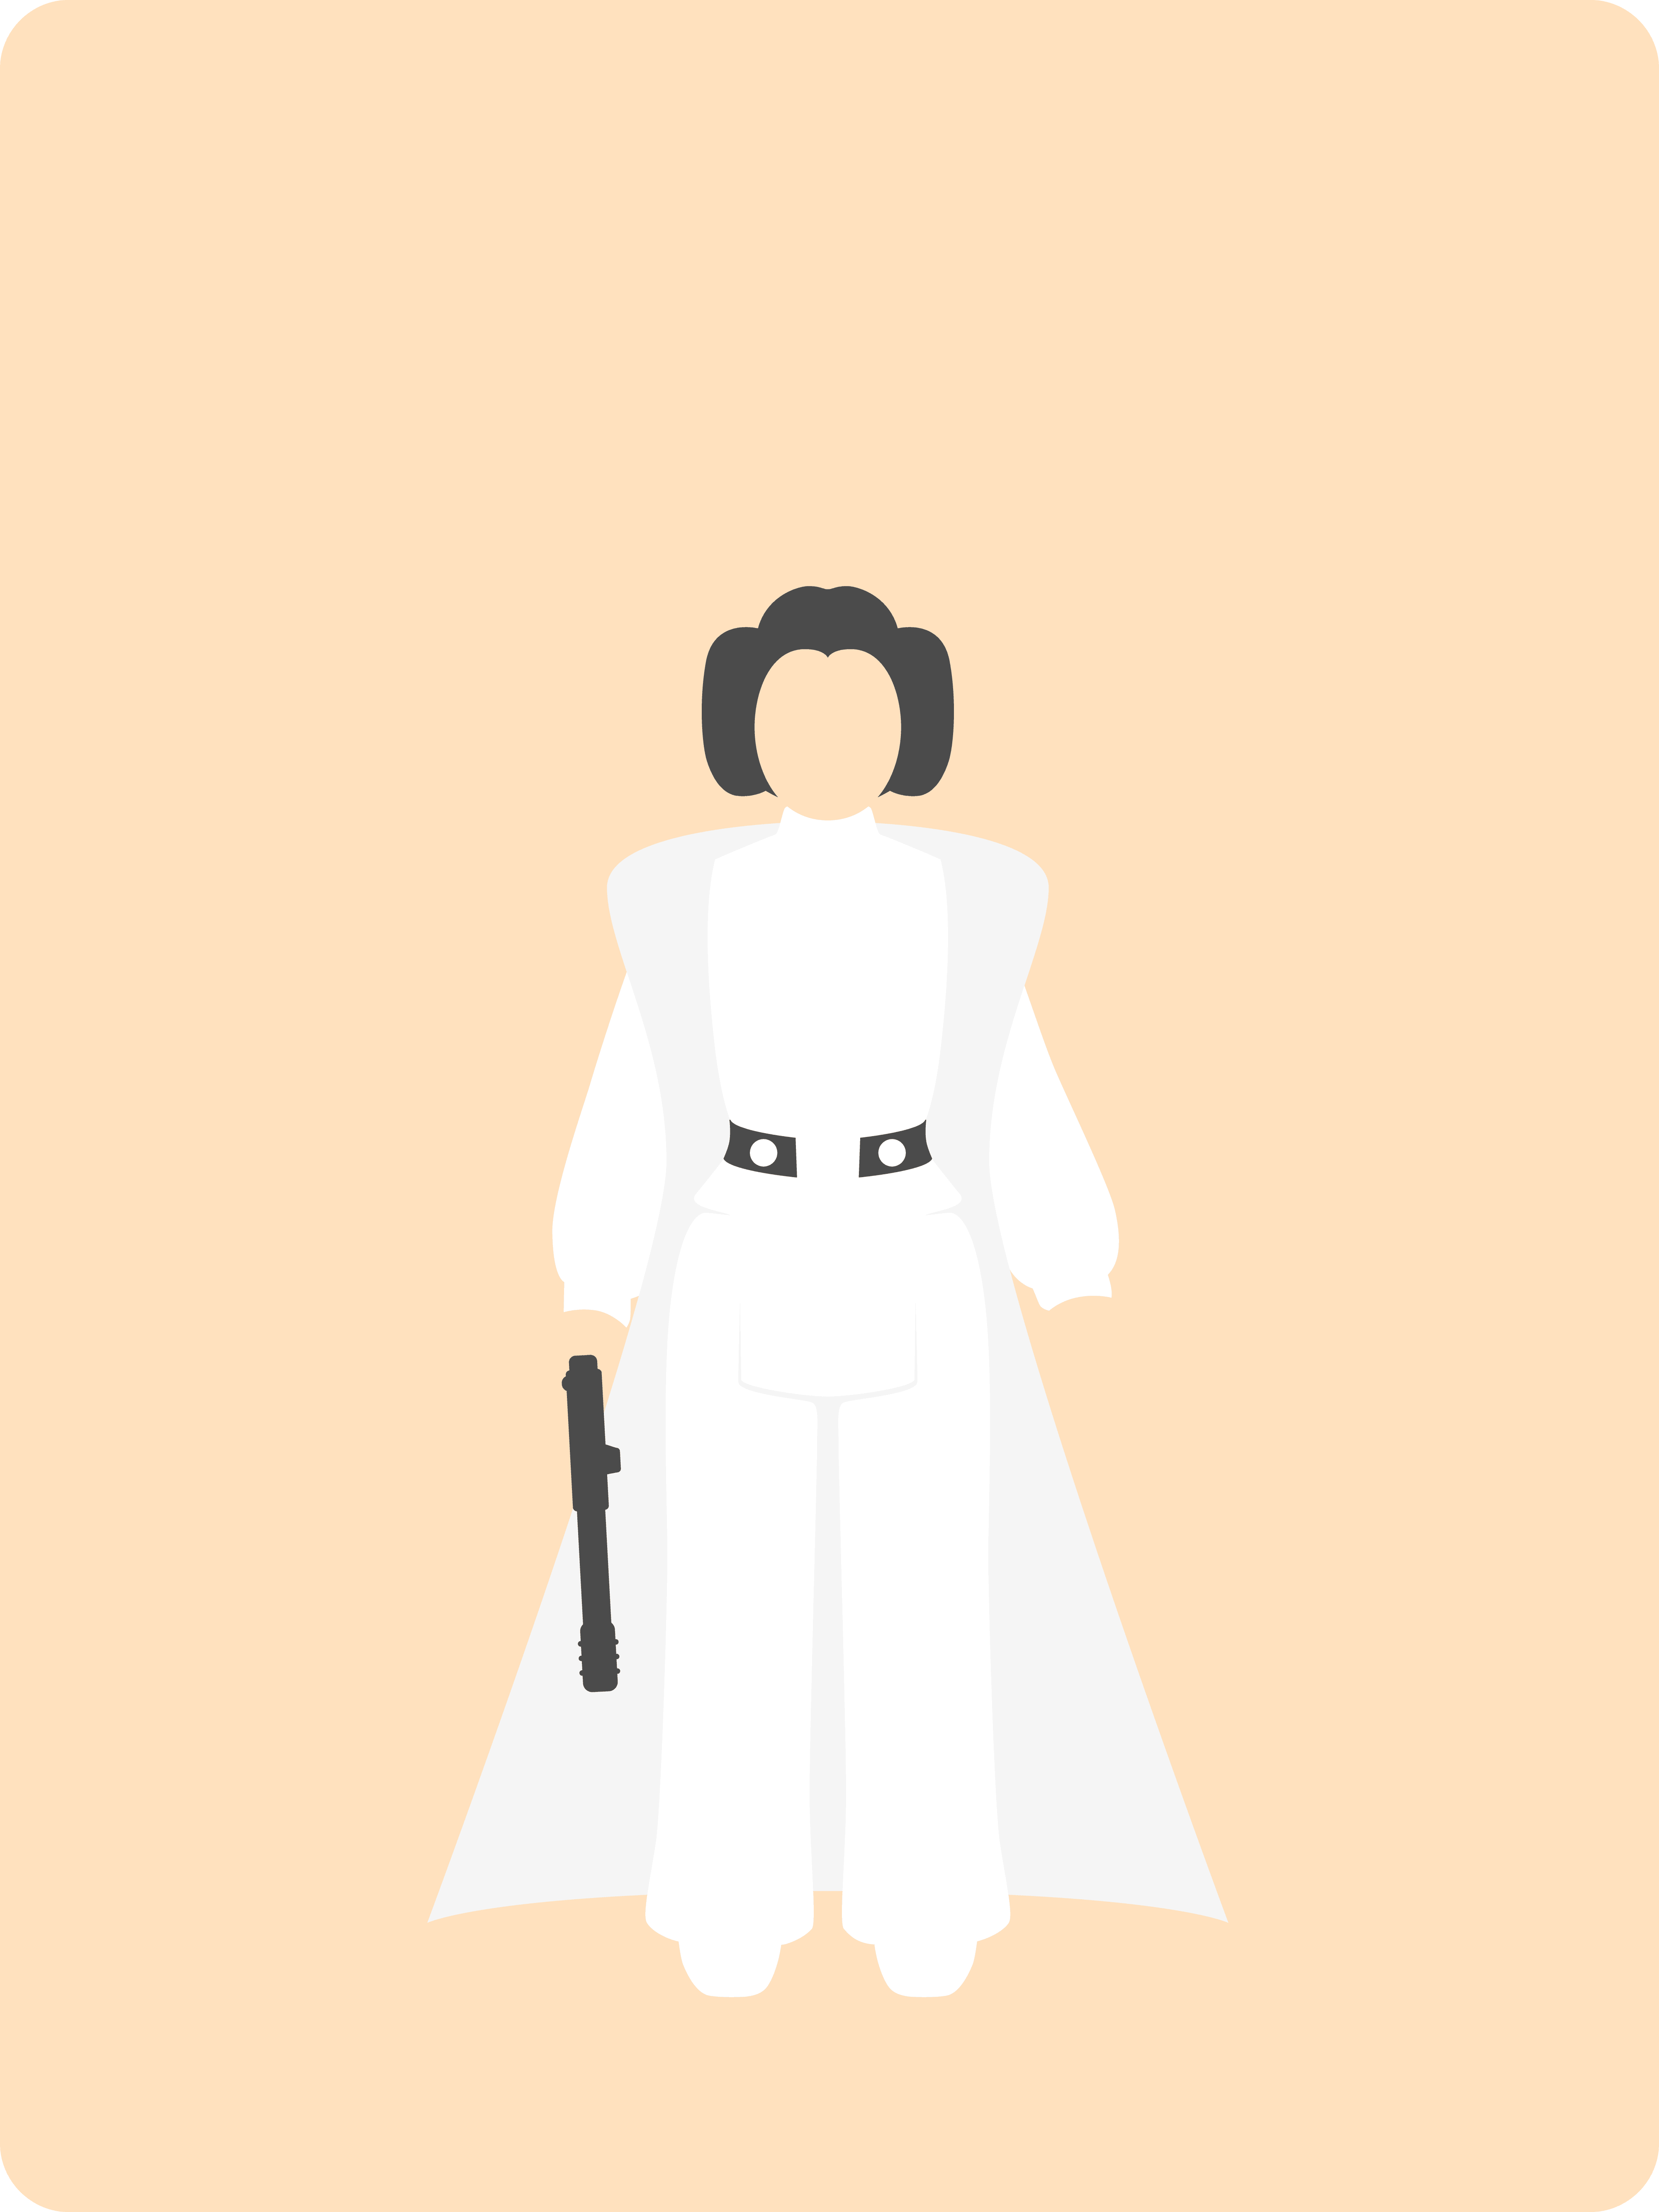 #004 Princess Leia Organa